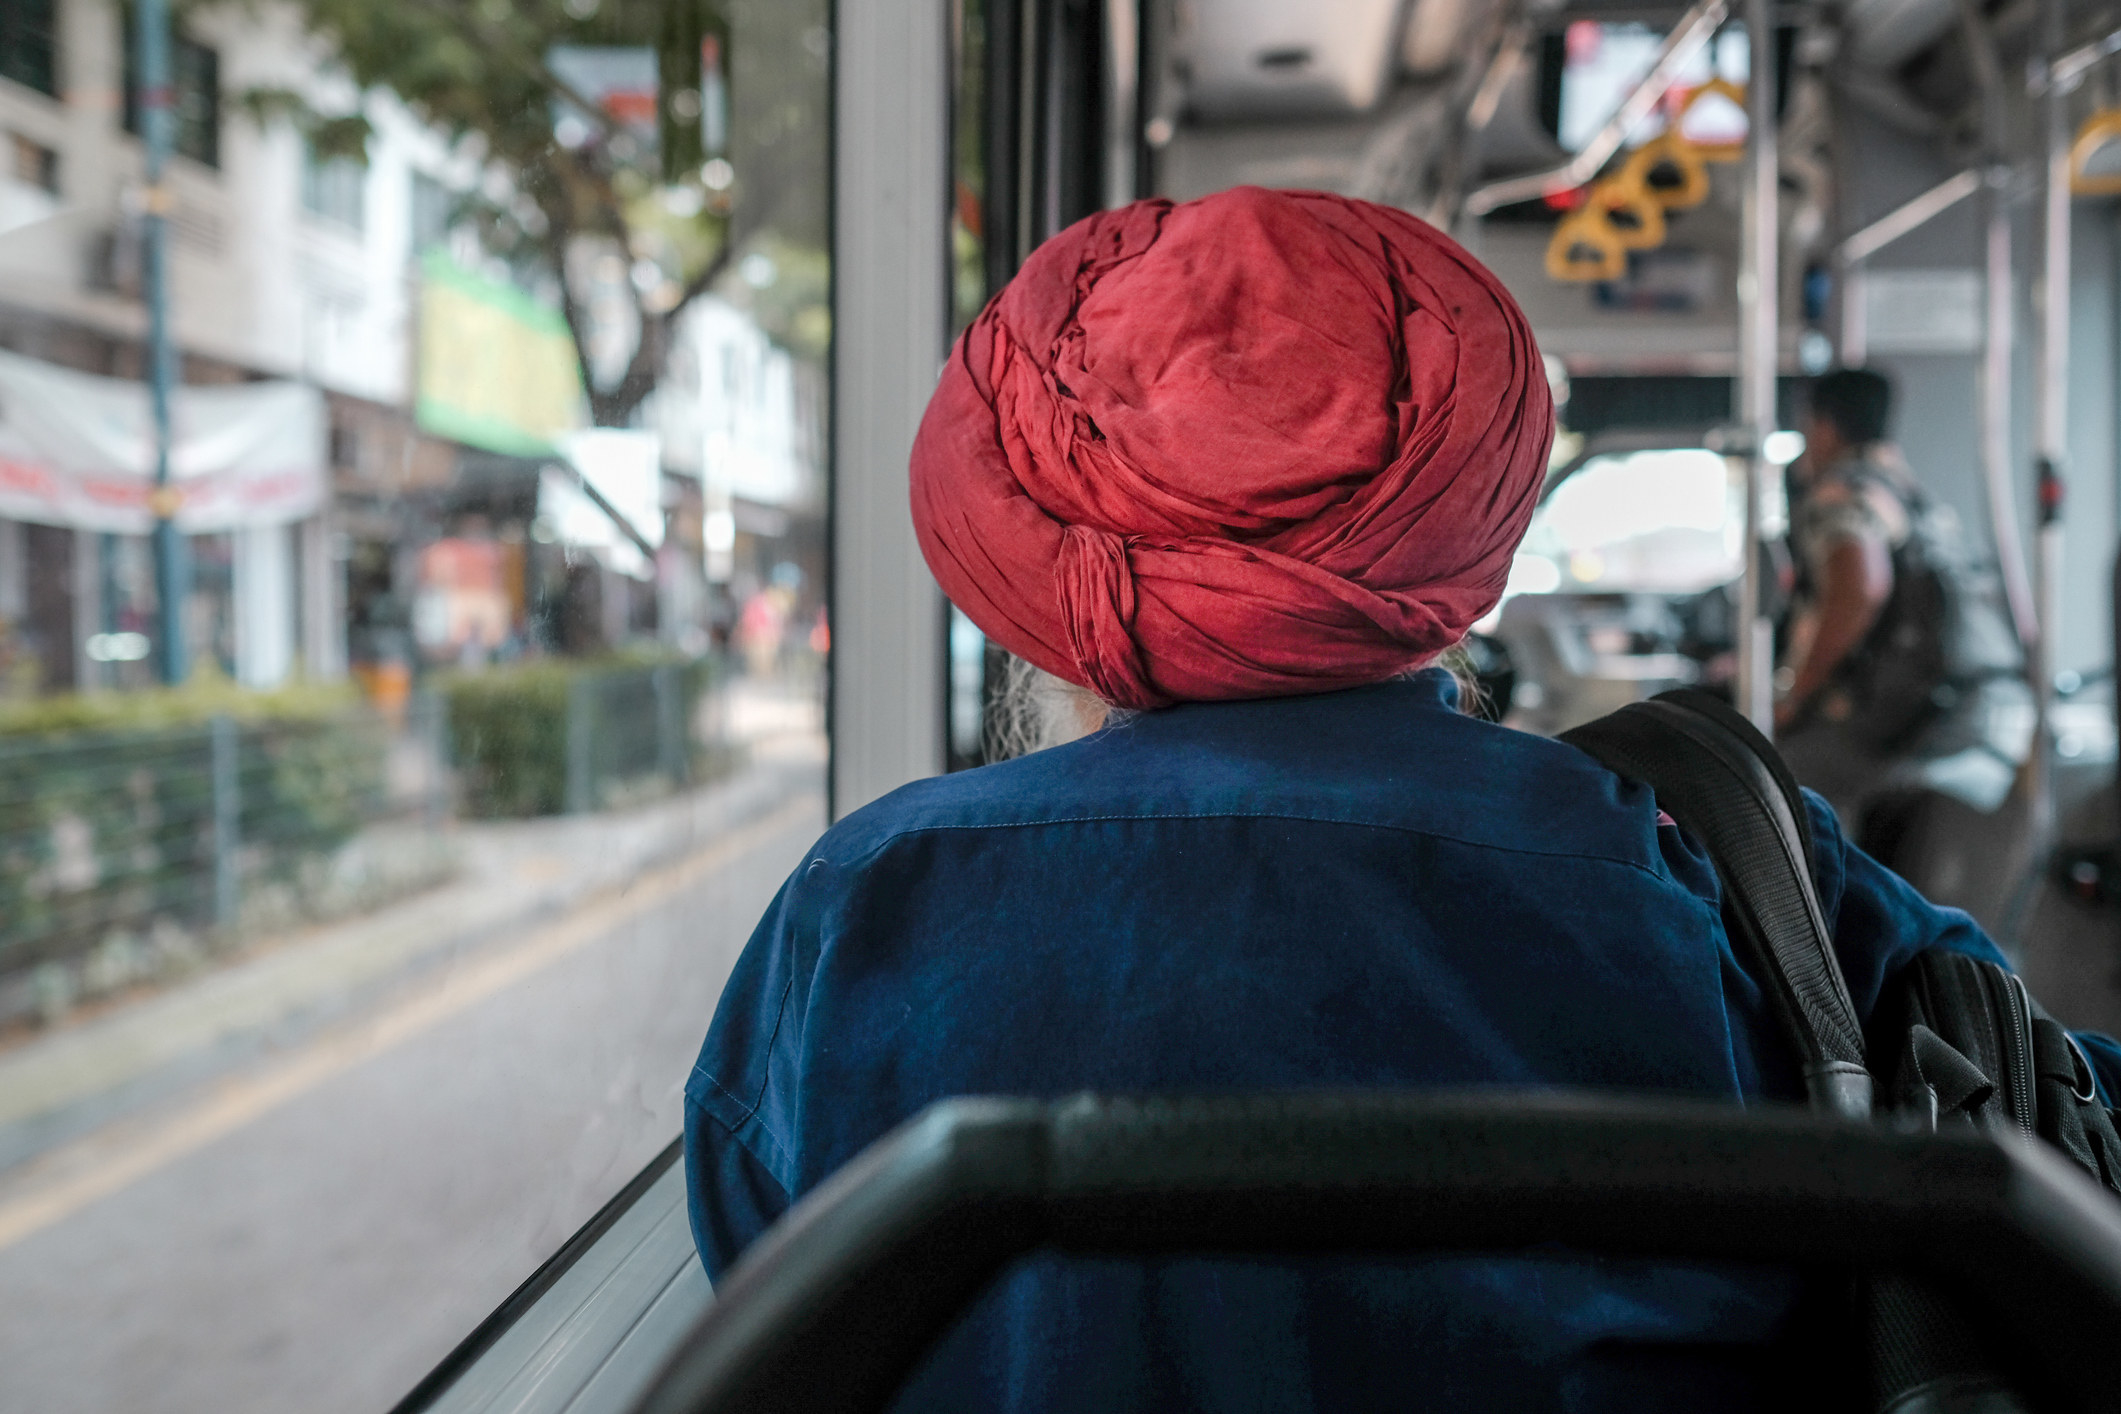 A man wearing a turban sitting on a bus